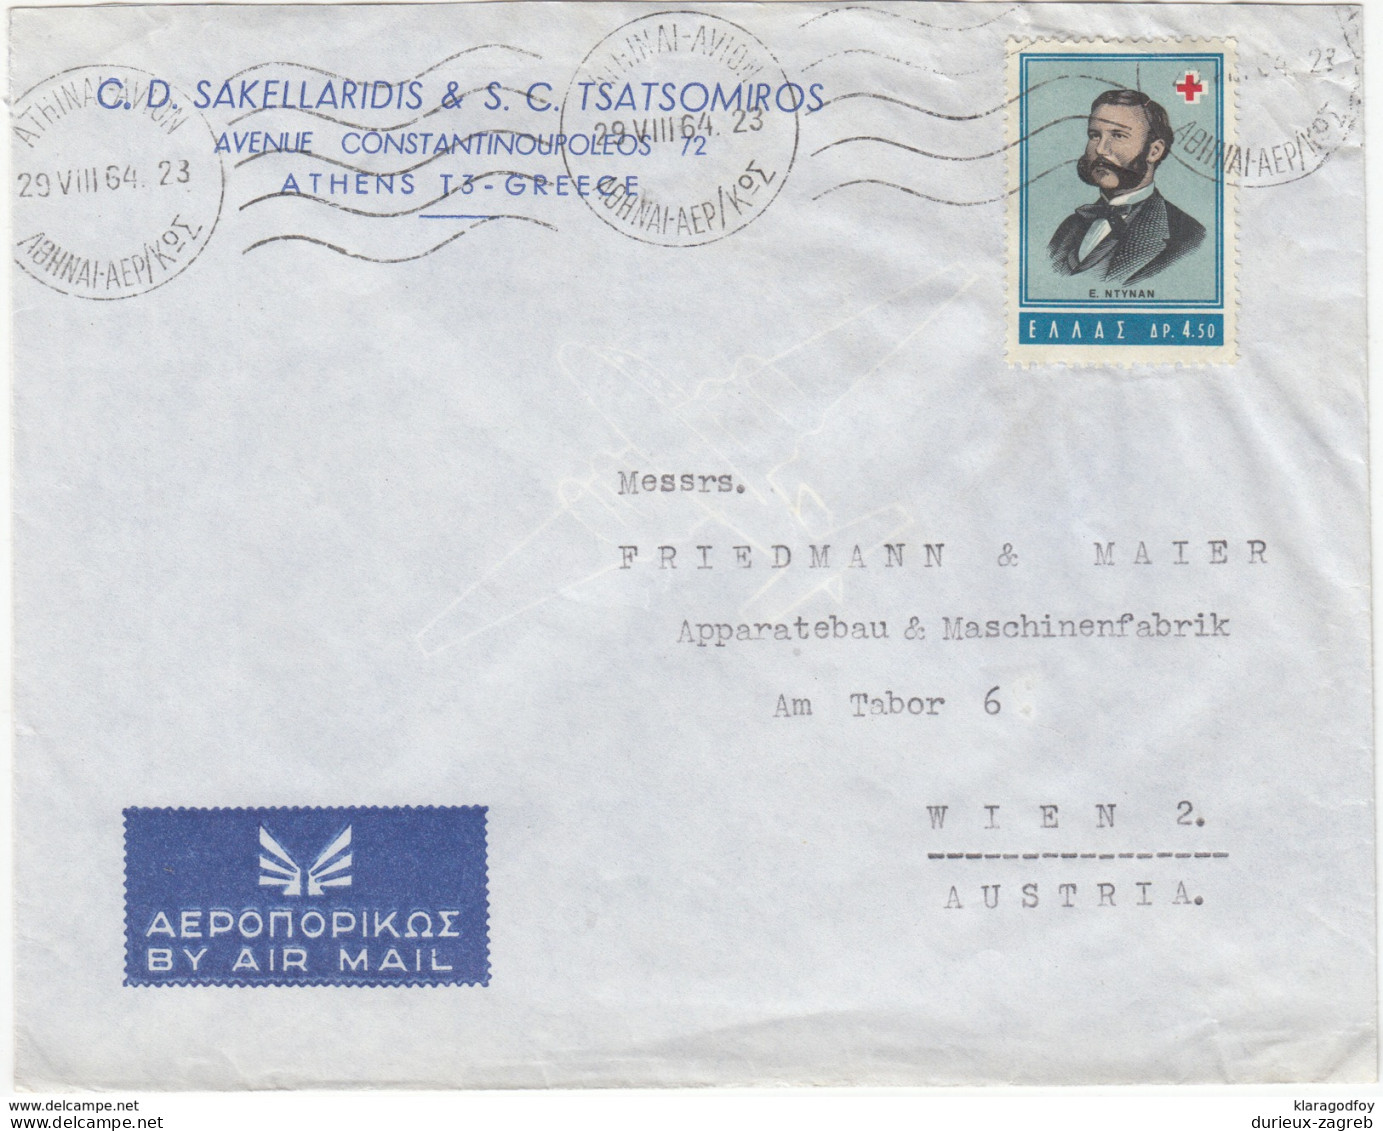 C.D. Sakellaridis & S.C. Tsatsomiros Company Air Mail Letter Cover Travelled 1964 To Austria B171005 - Storia Postale